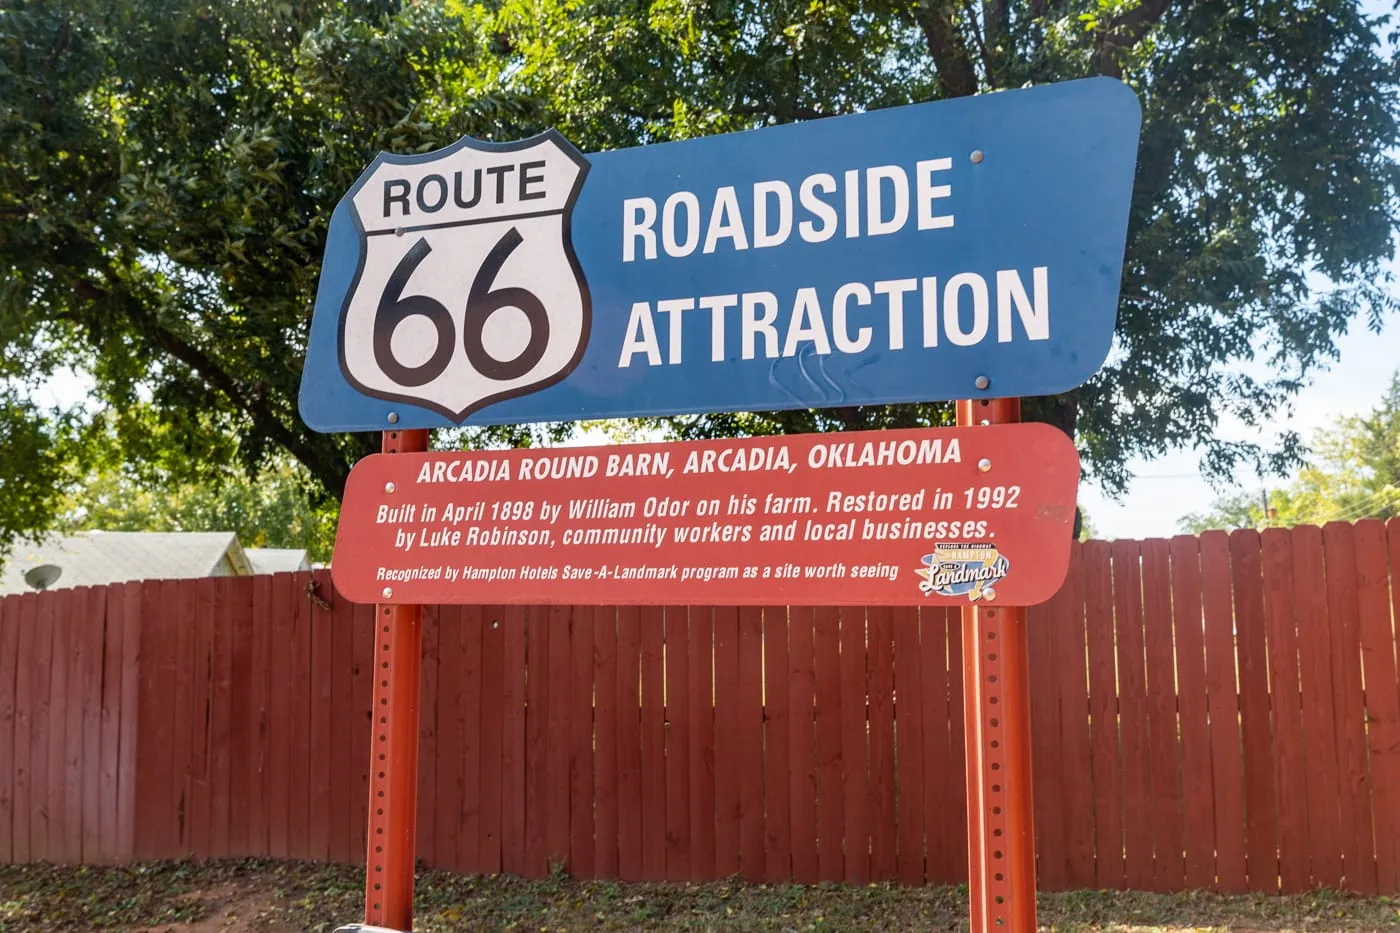 Arcadia Round Barn on Oklahoma Route 66